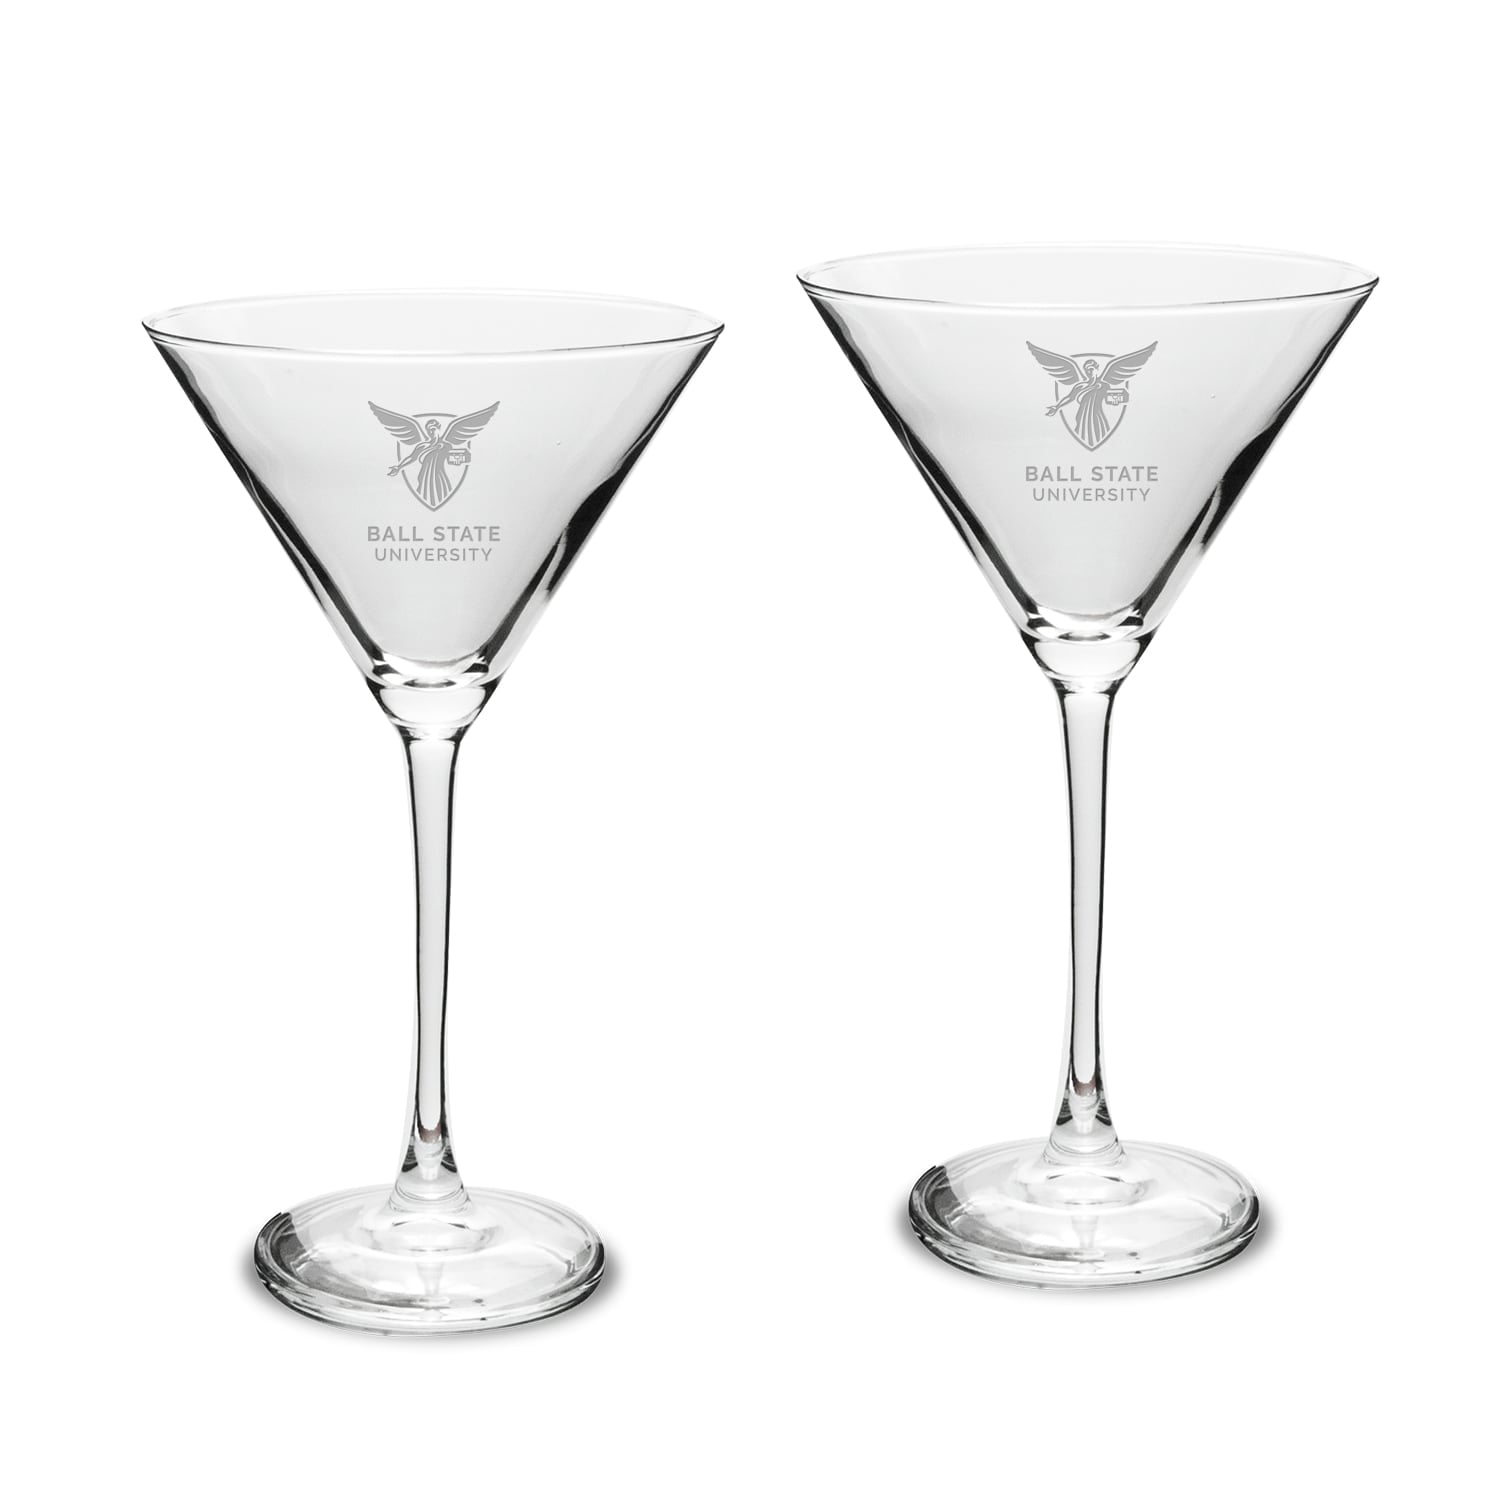 New Arcoroc 10 oz Plastic Martini Glasses Set Of 2 Shatter Resistant 